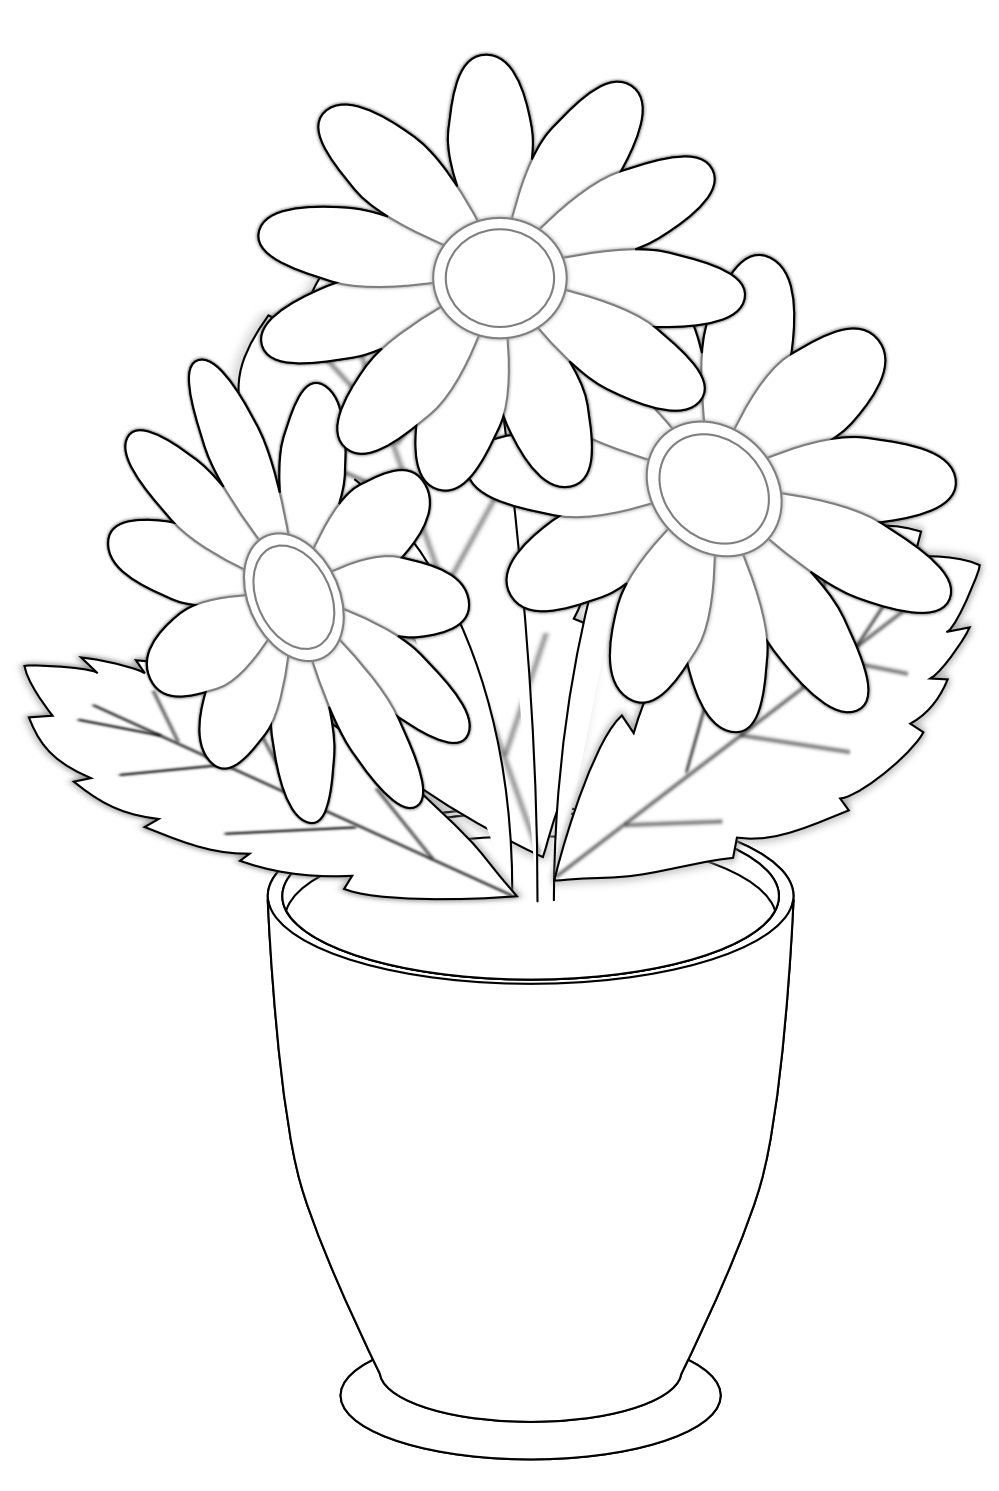 PNG Vase Black And White - 54985